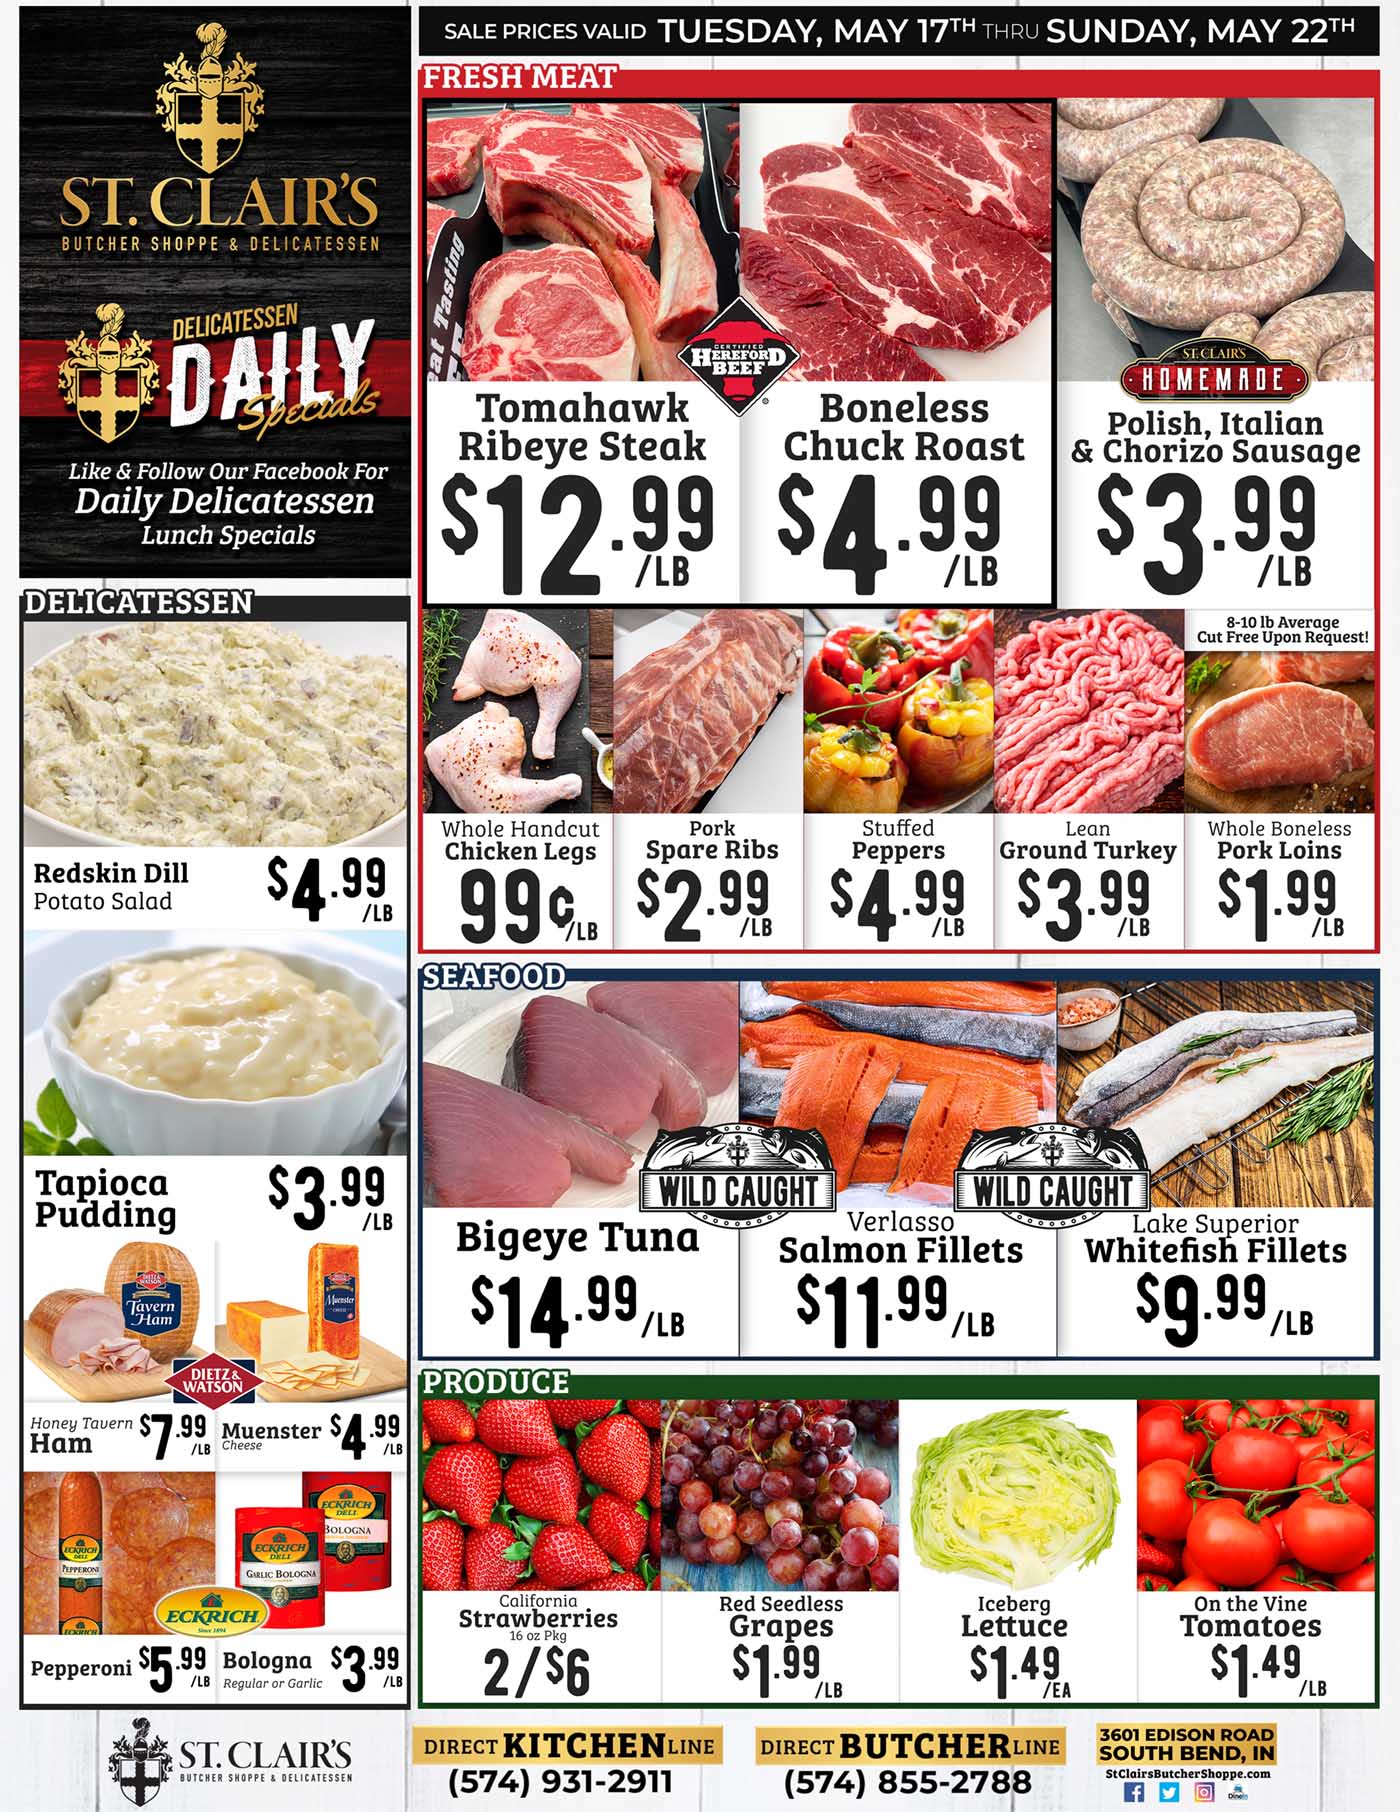 St. Clair's Butcher Shoppe & Delicatessen Deals of the Week